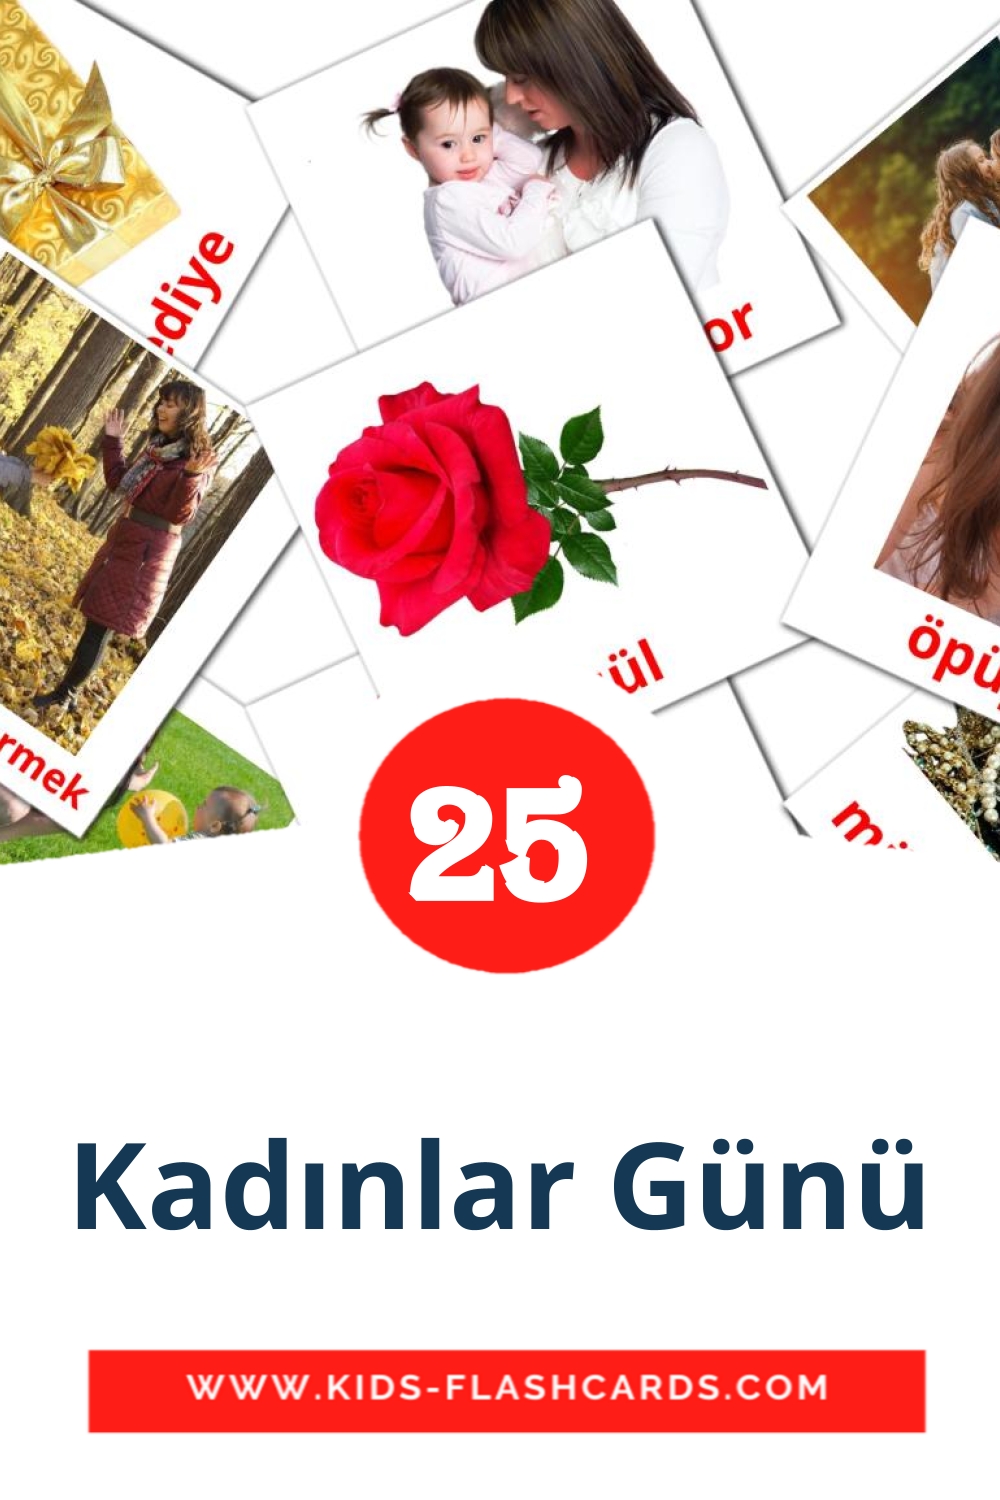 25 carte illustrate di Kadınlar Günü per la scuola materna in turco